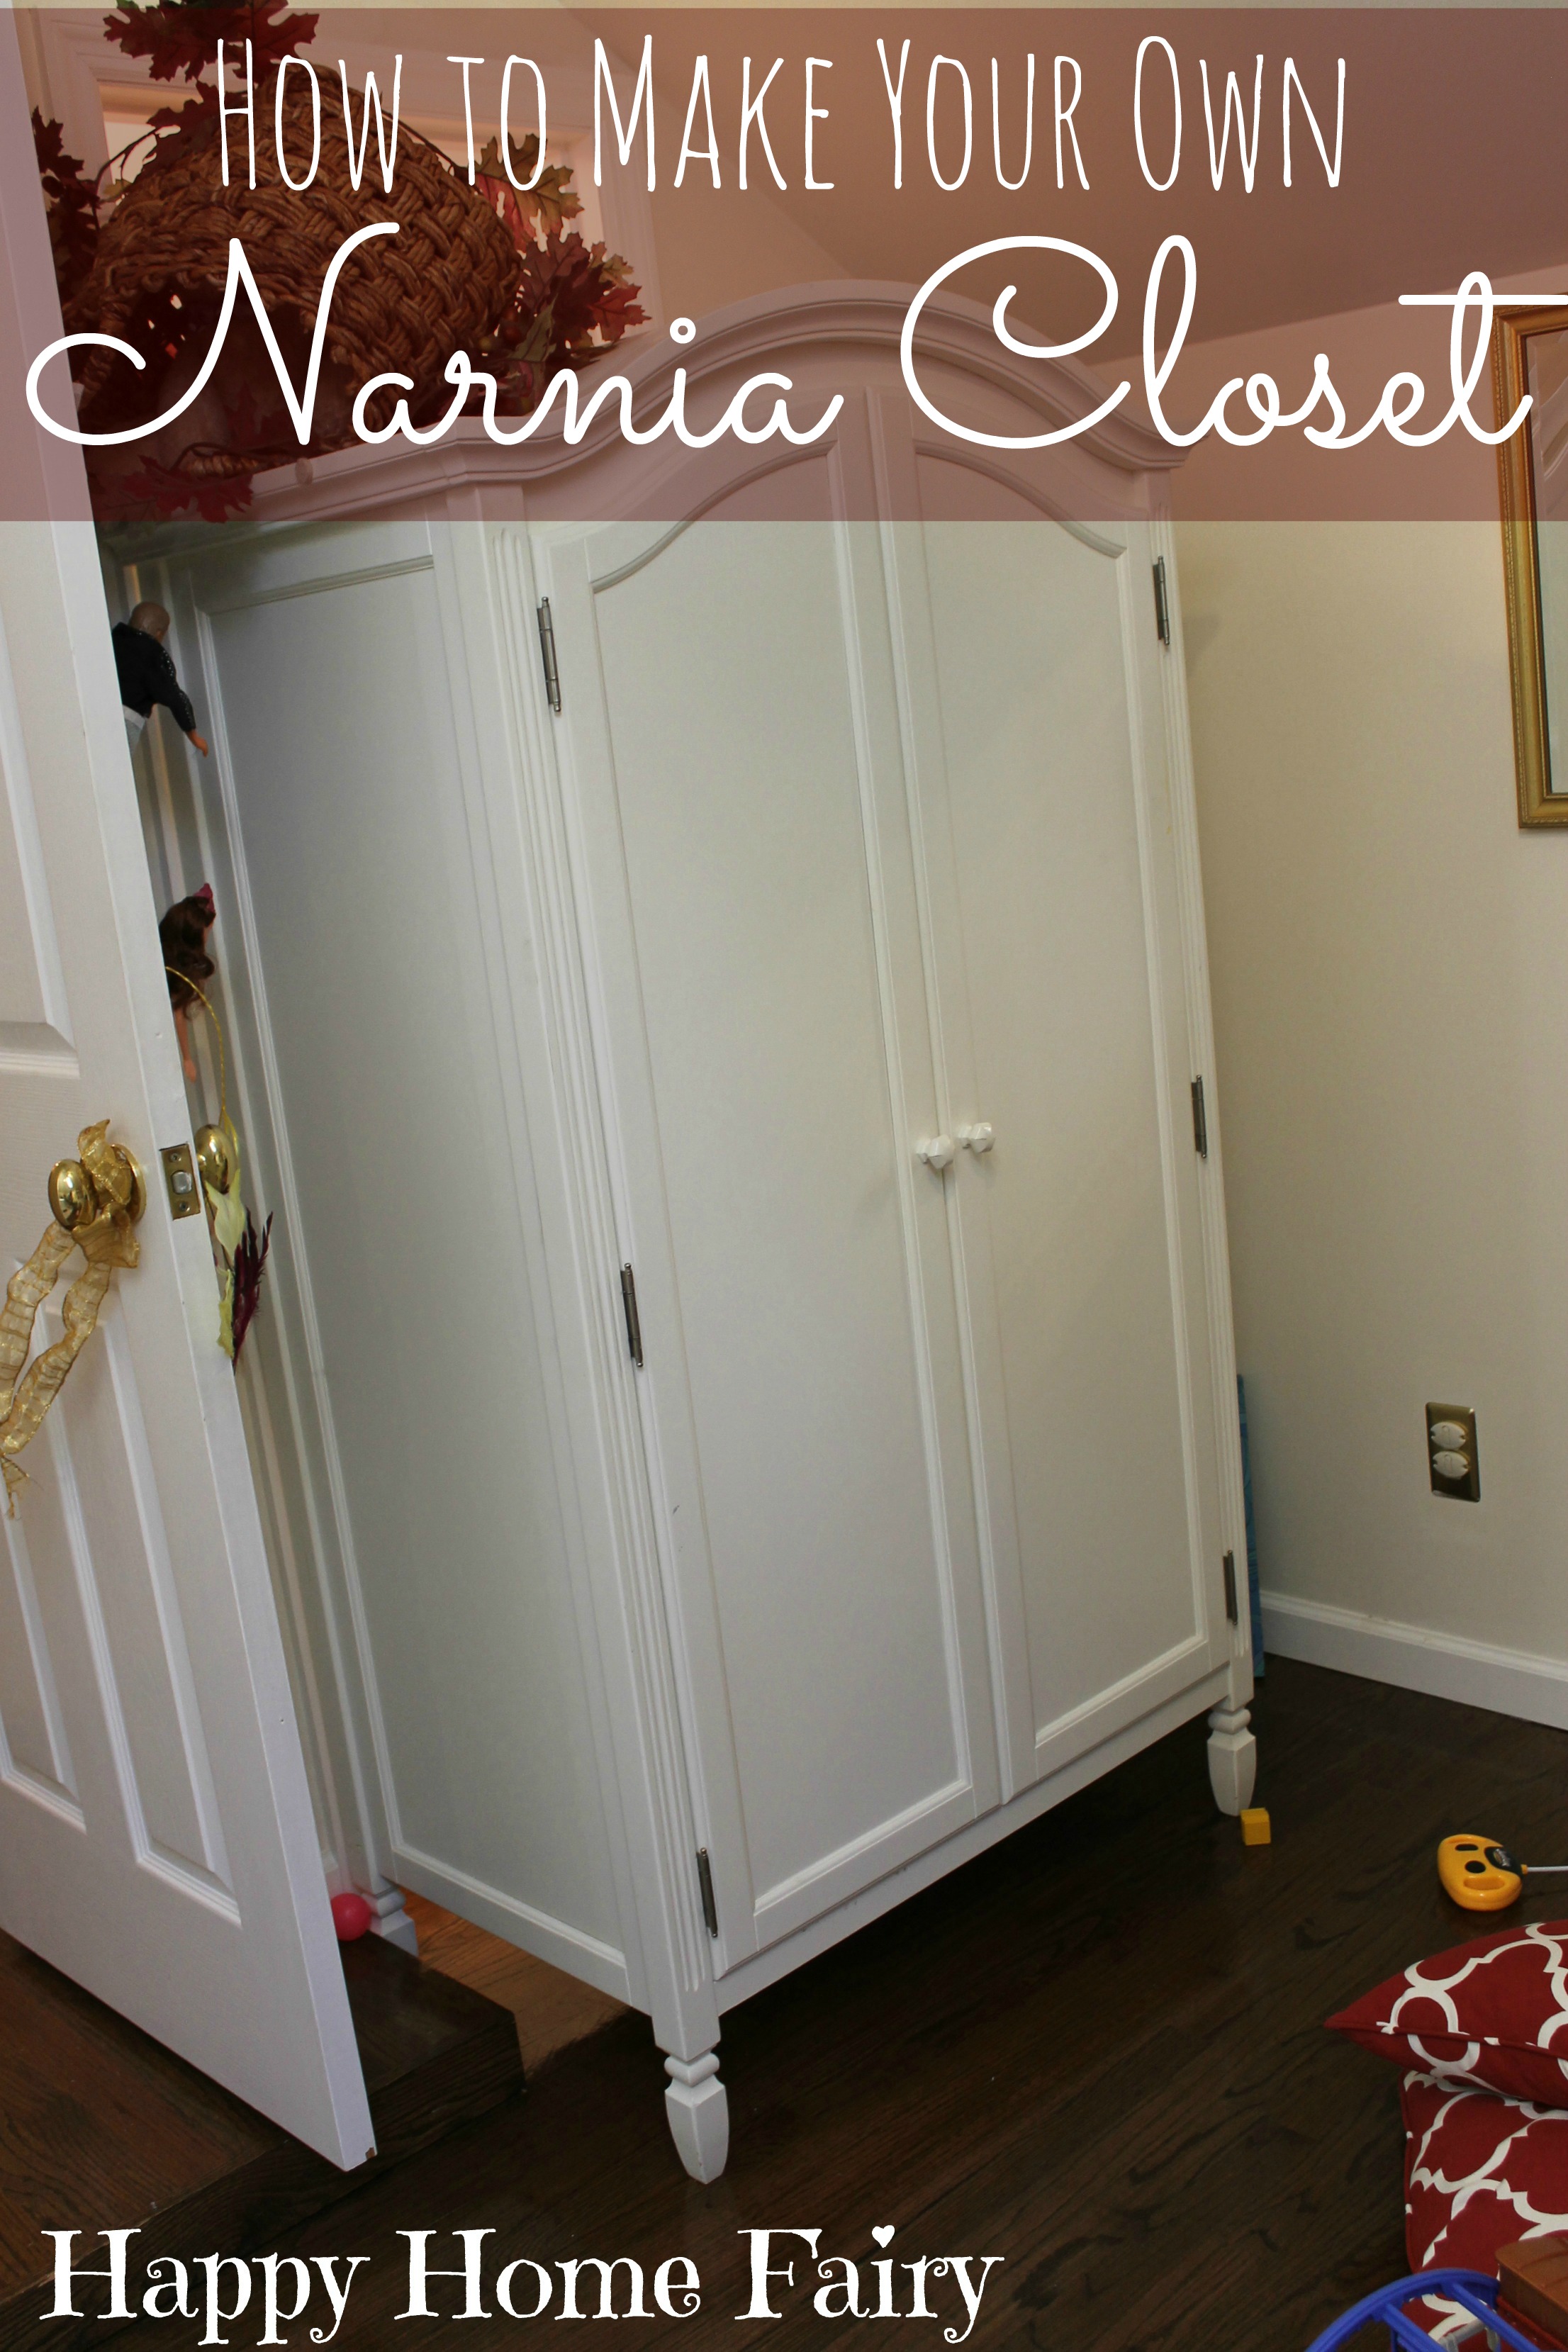 How to Make A Narnia Closet - Happy Home Fairy